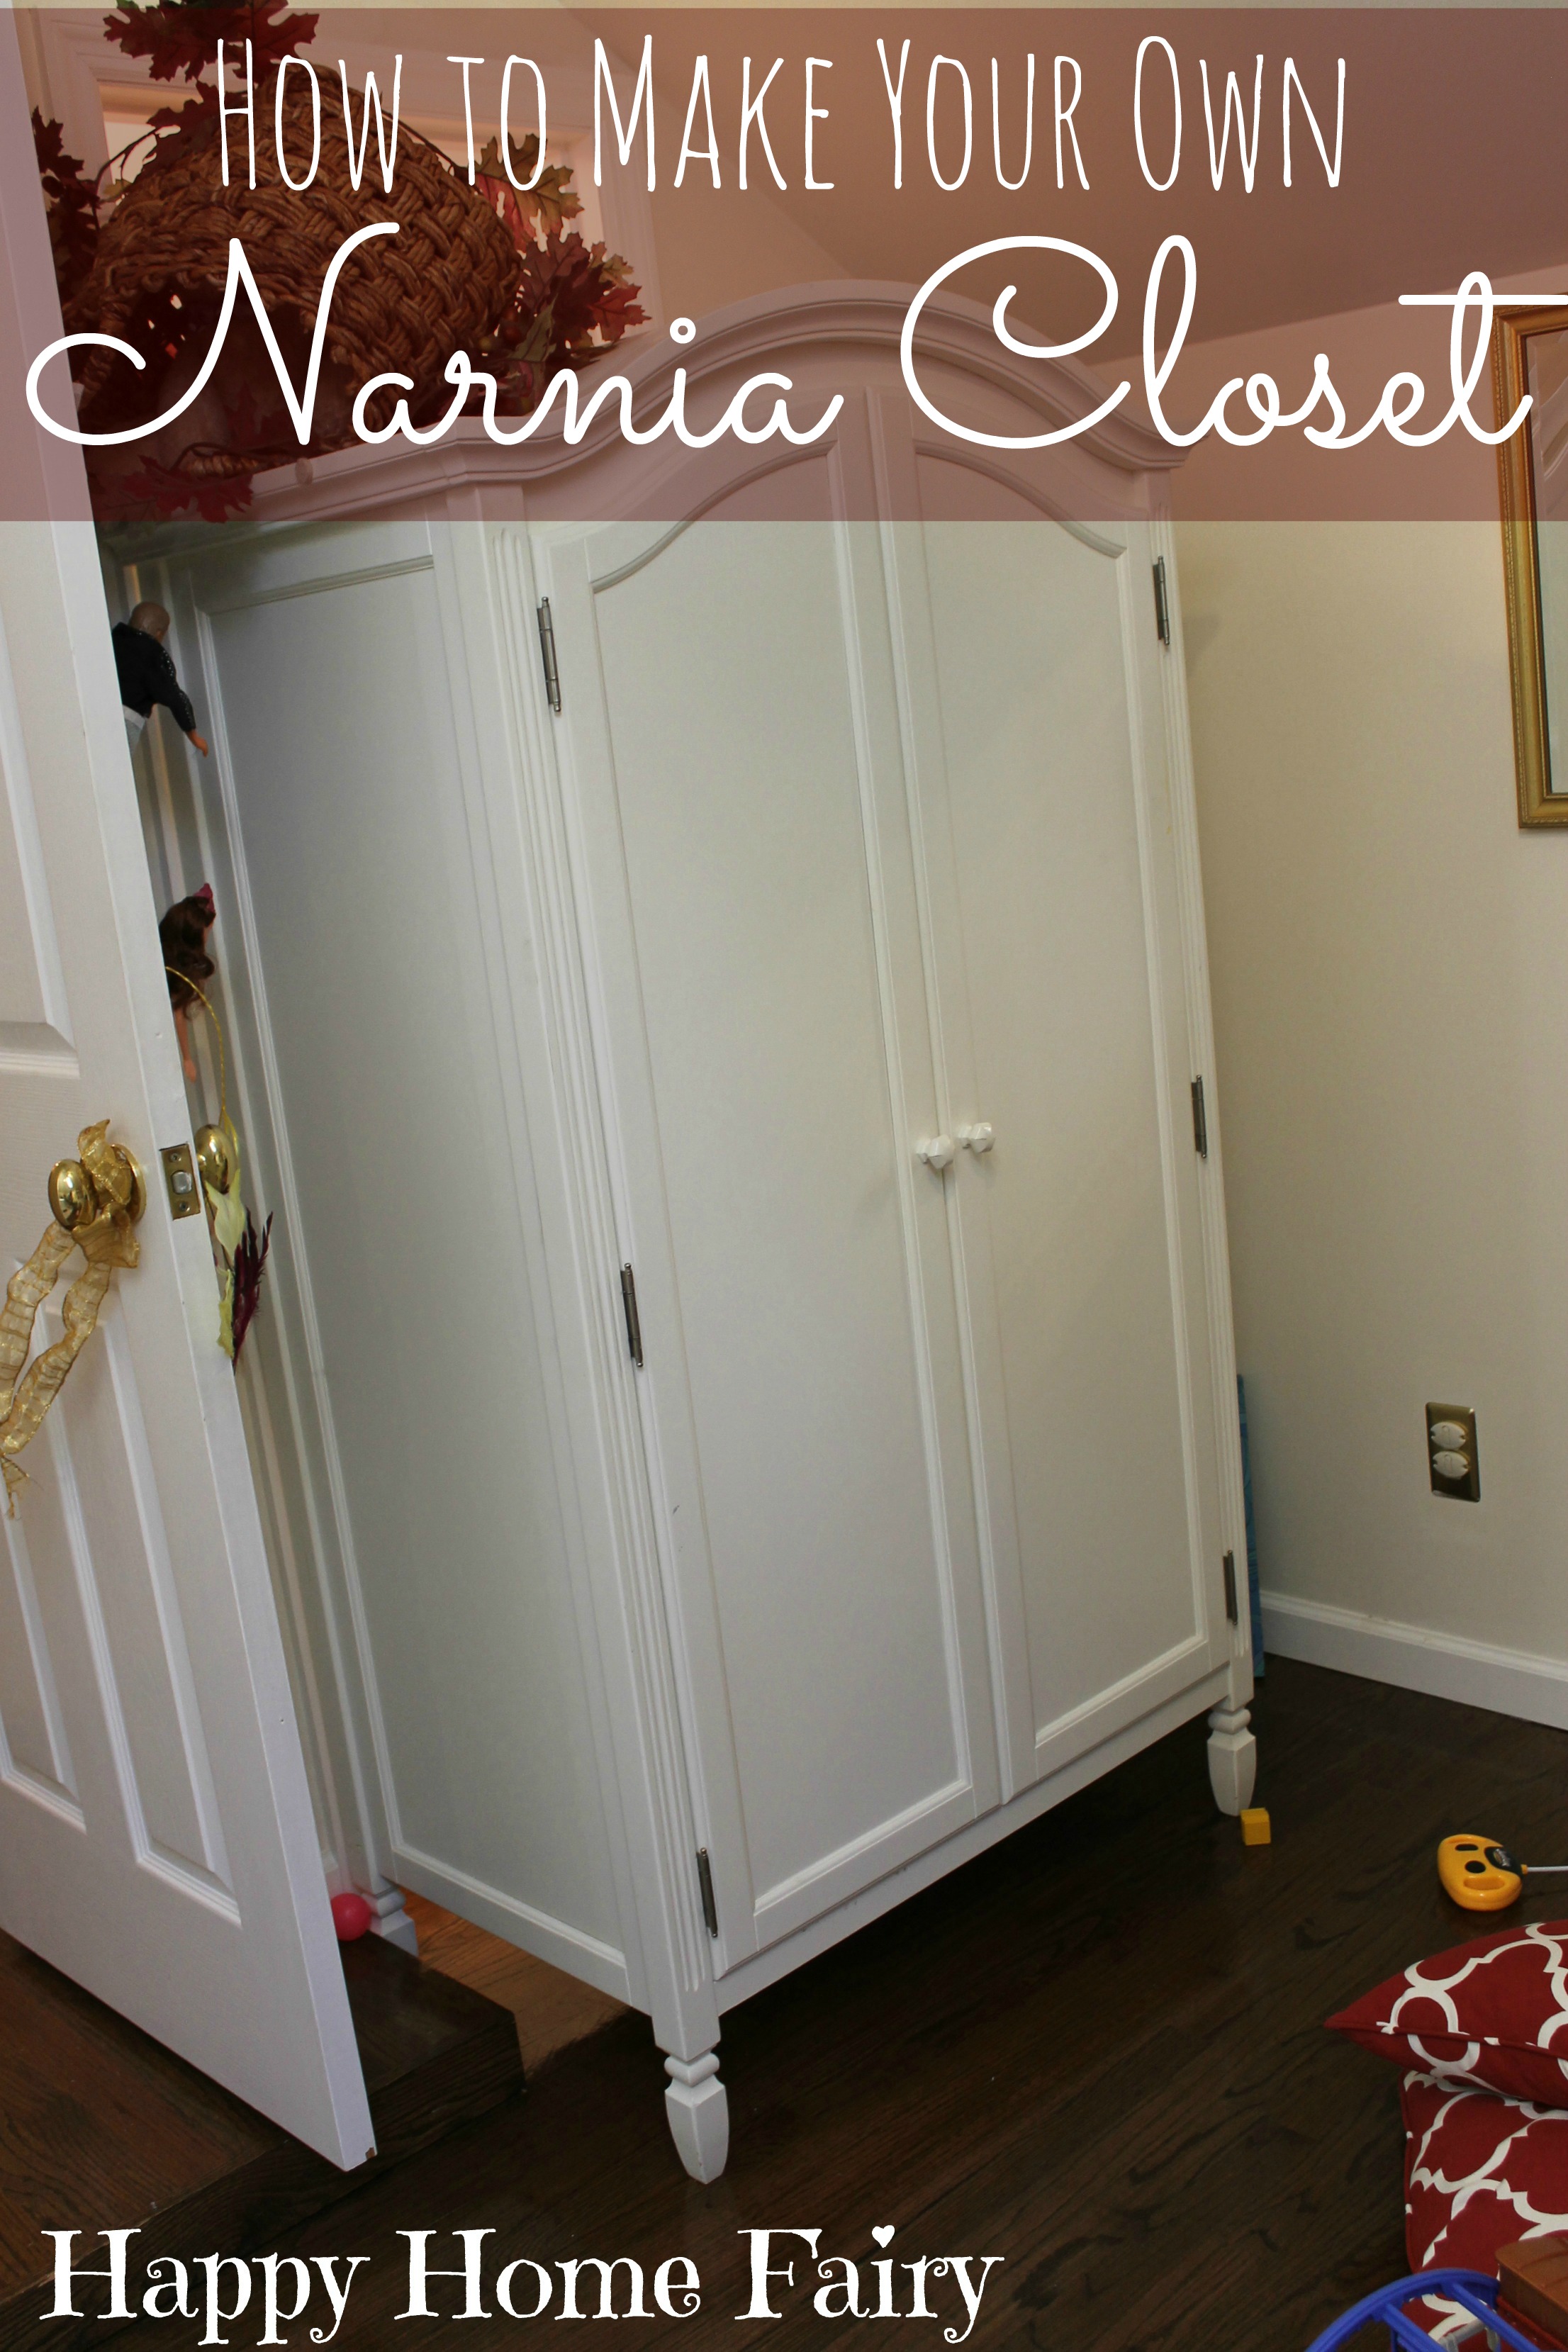 How to Make A Narnia Closet - Happy Home Fairy